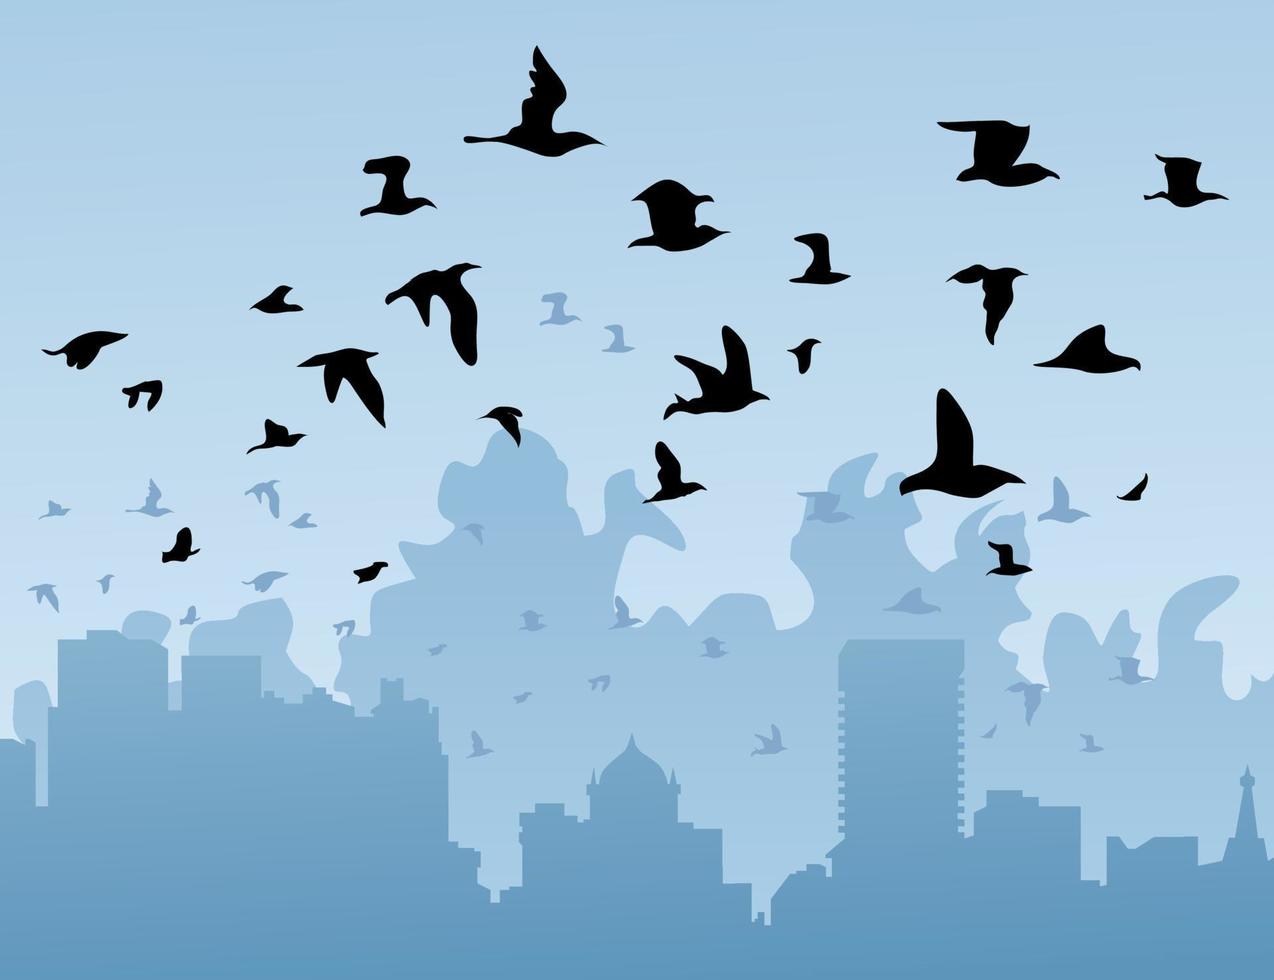 The flight of birds flies over wood. A vector illustration